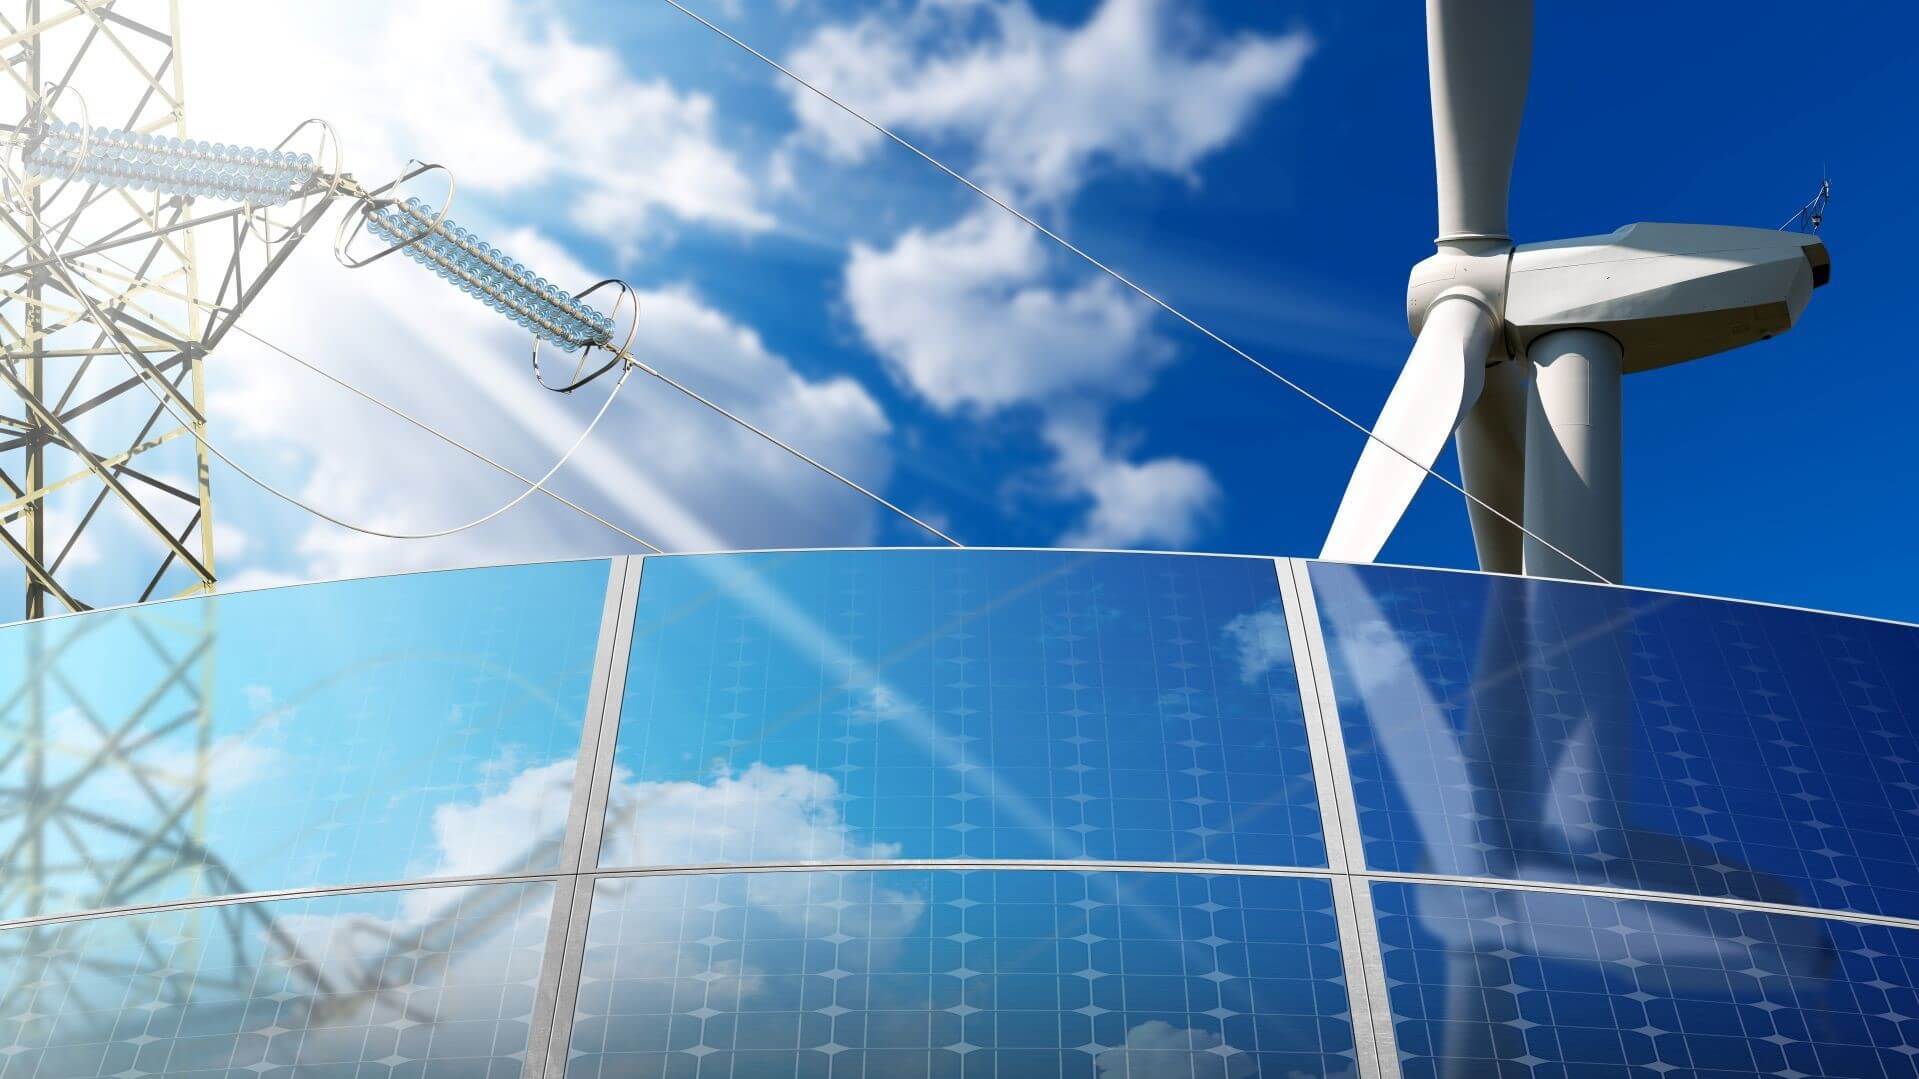 Pylon, solar panel and wind turbine against a blue sky